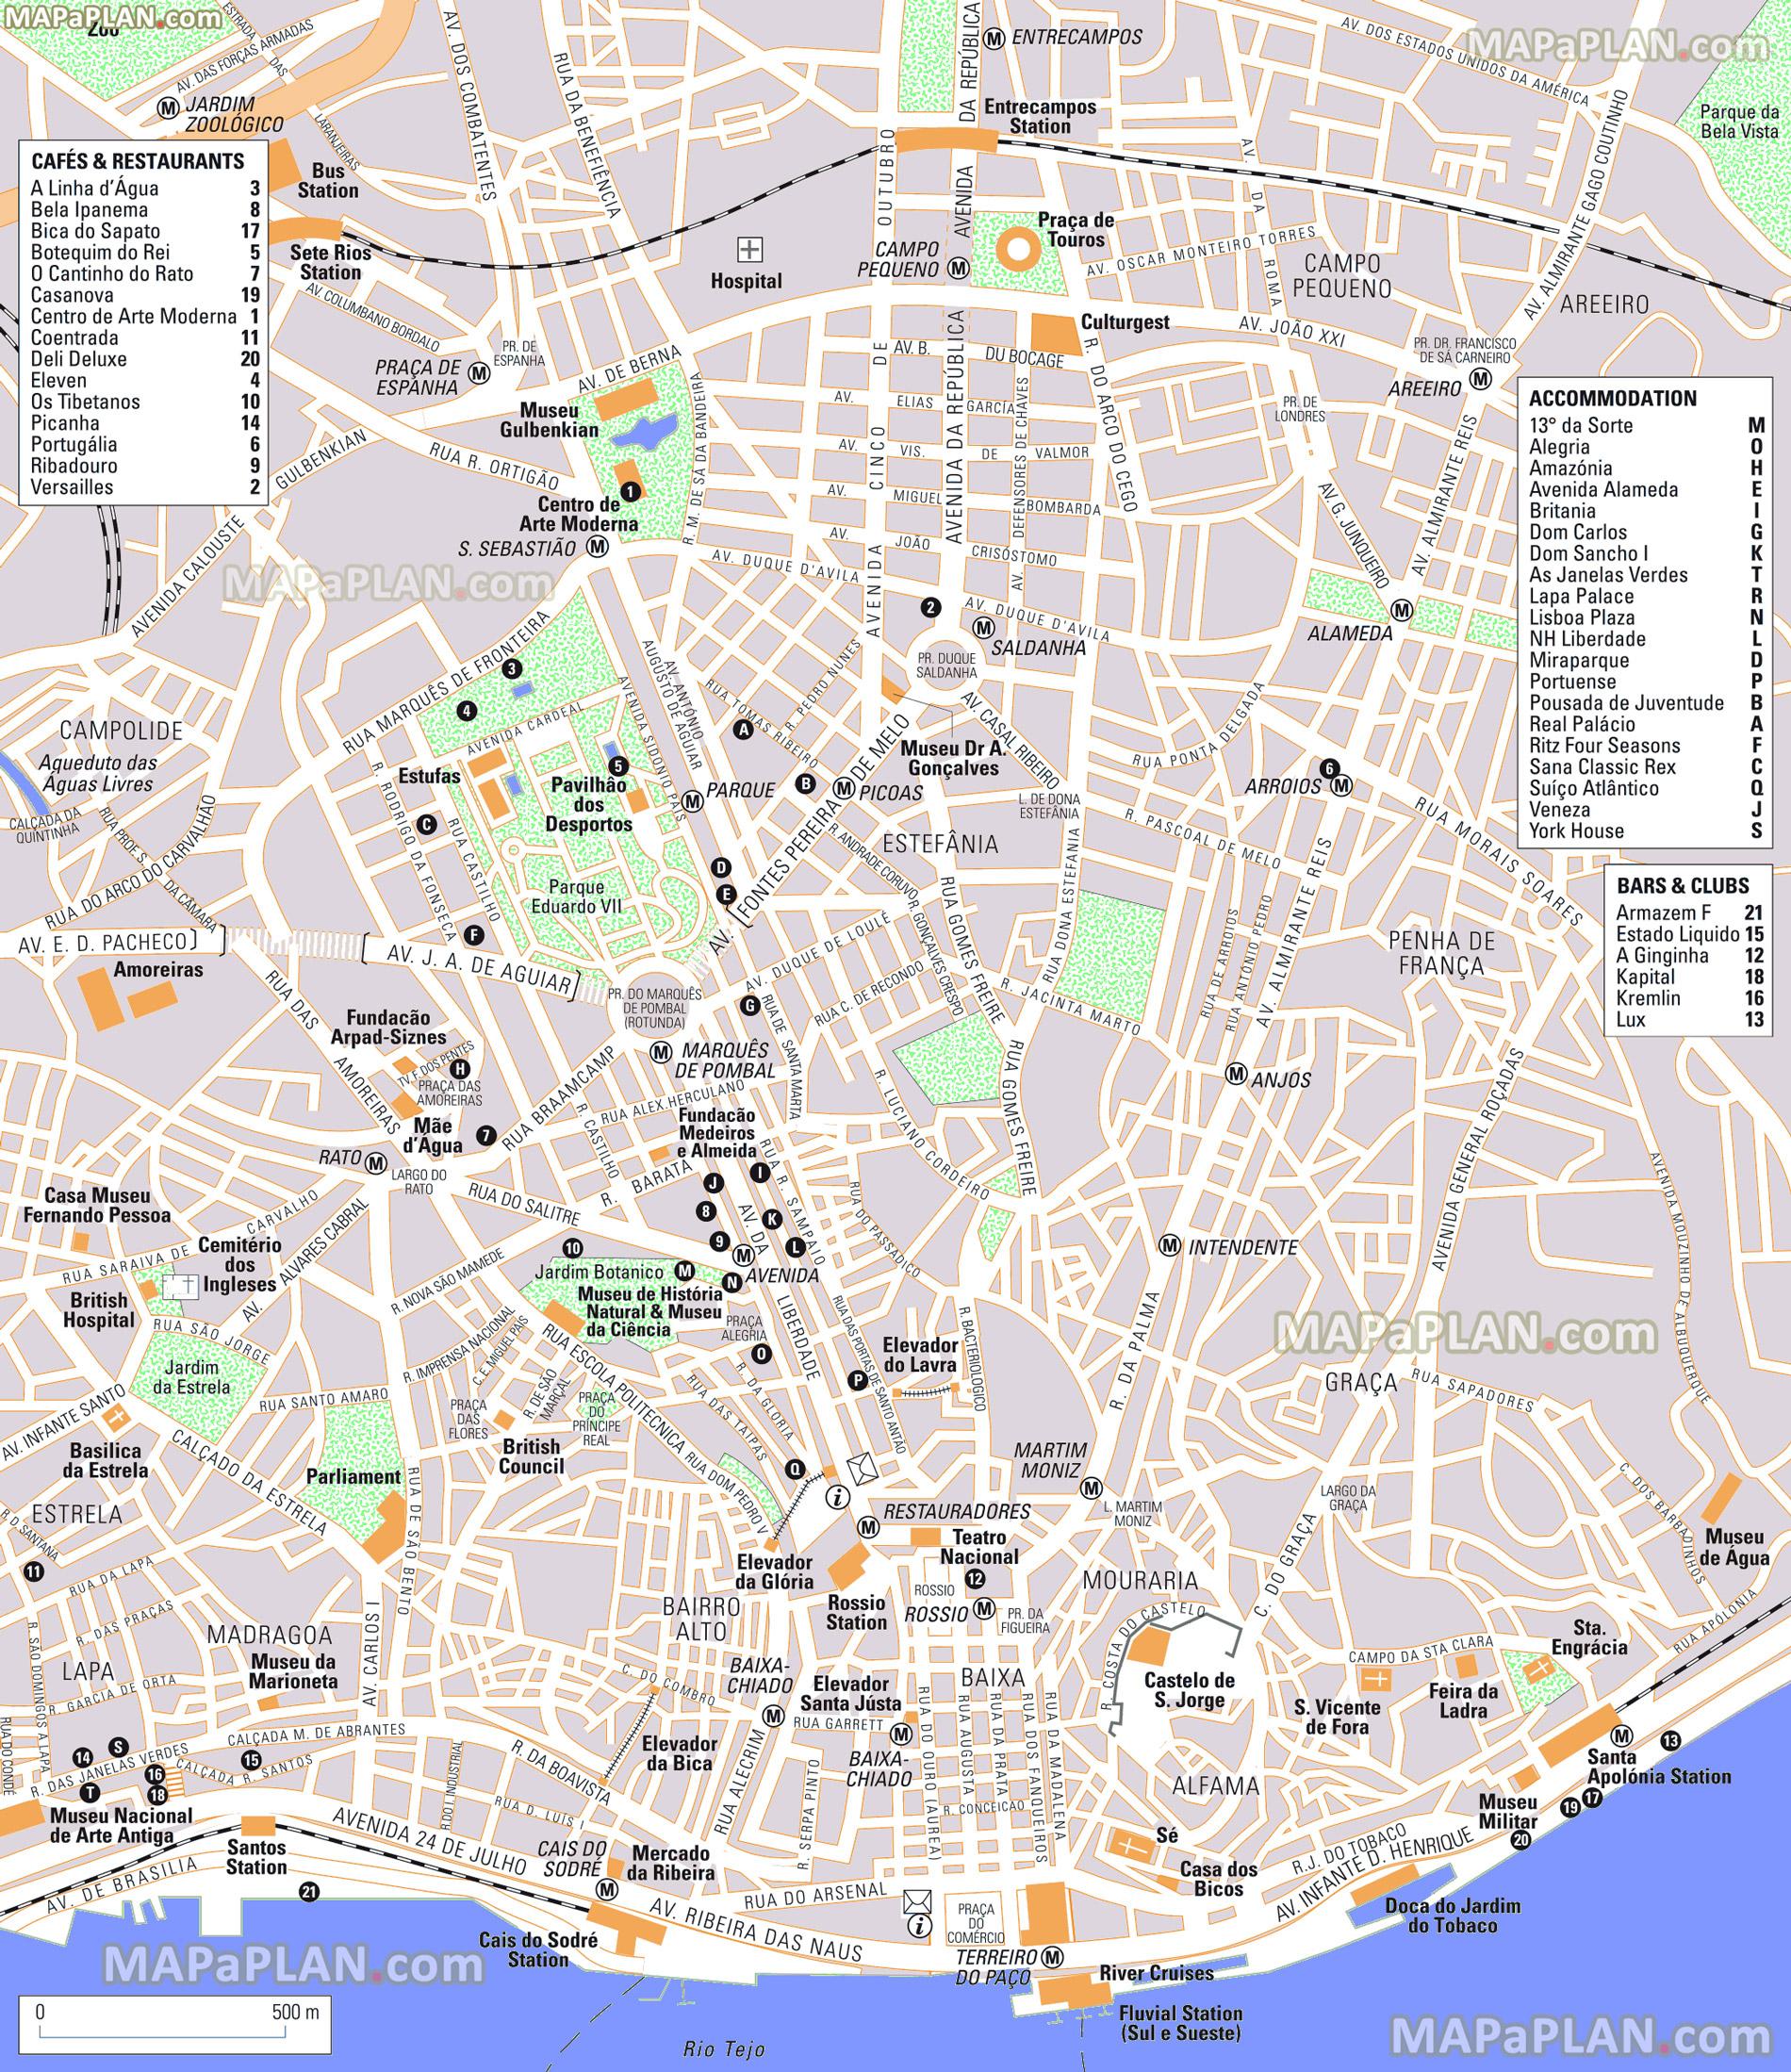 lisbon tourist office locations